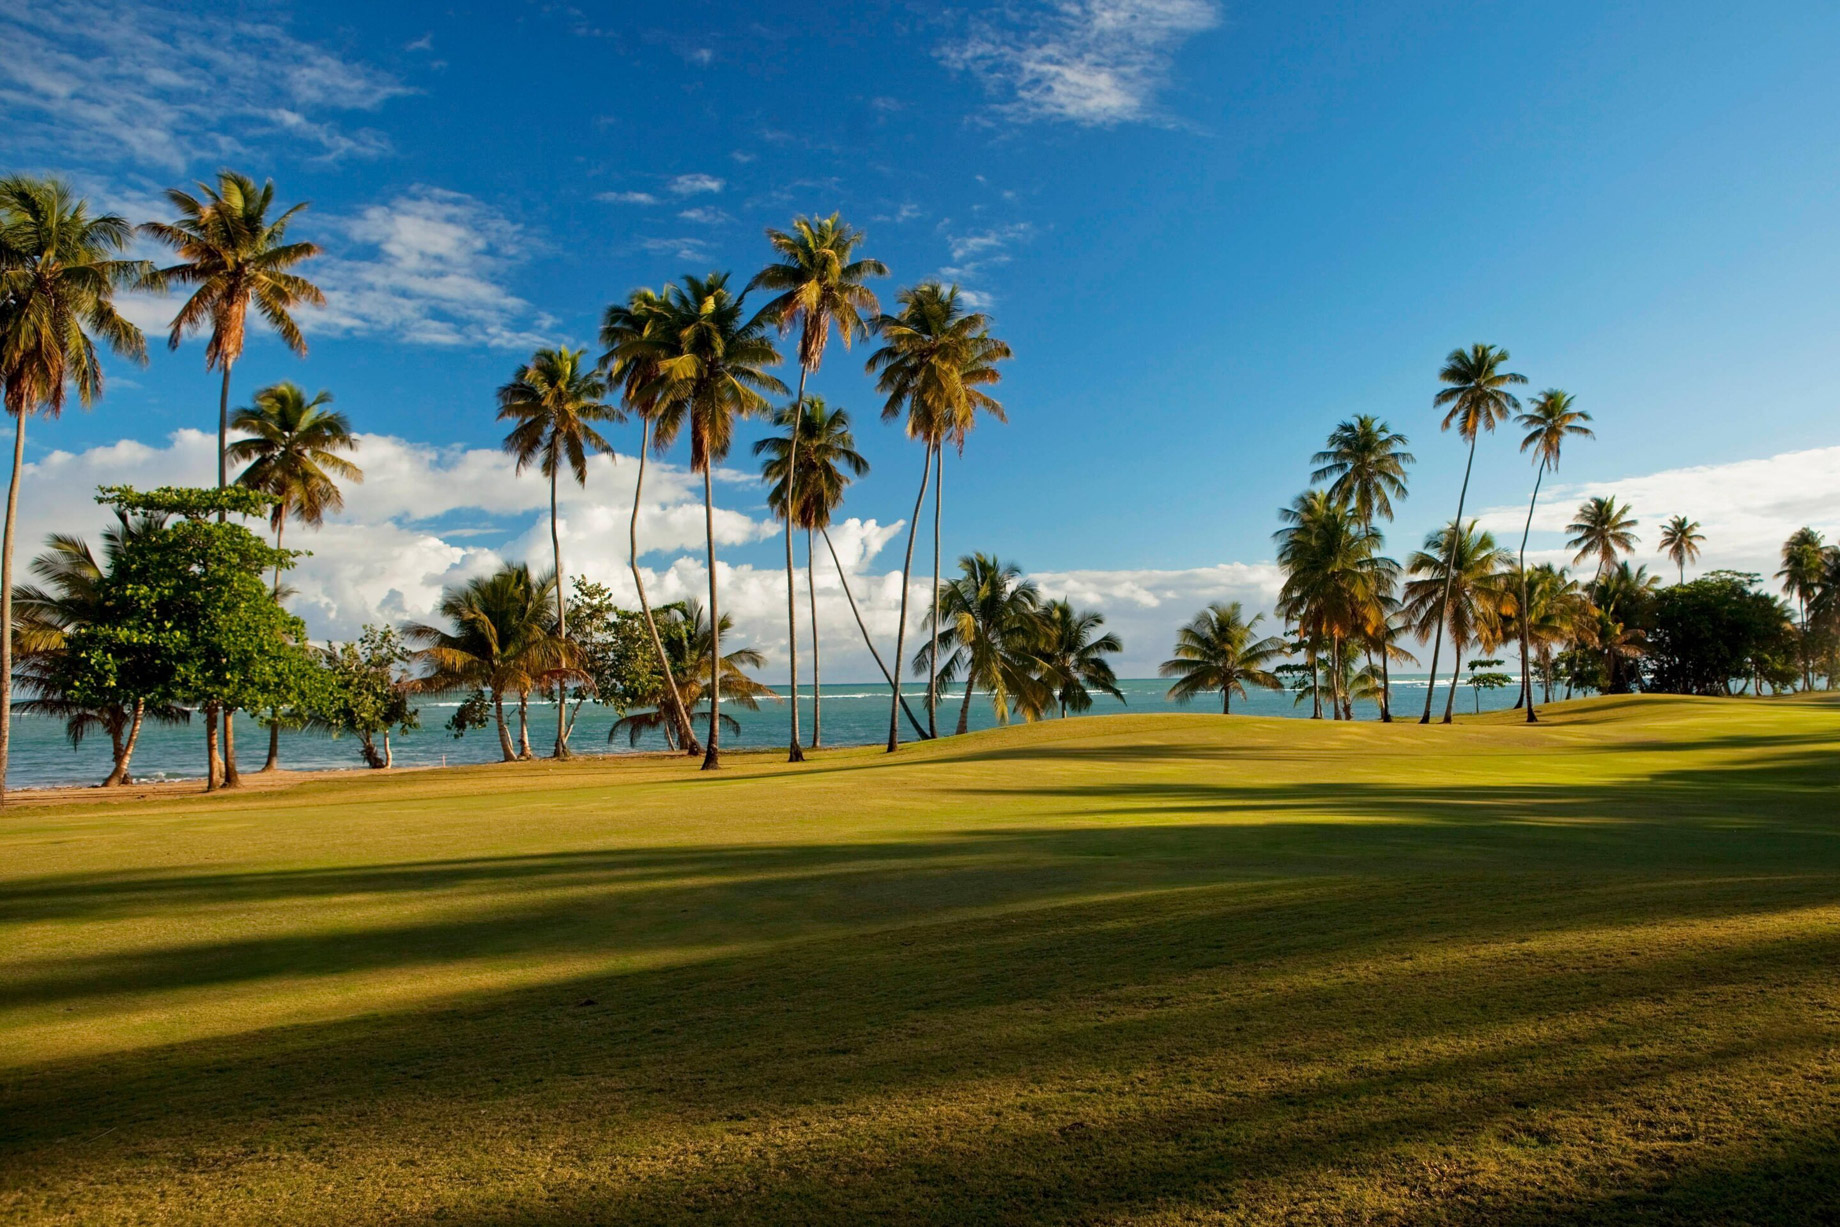 The St. Regis Bahia Beach Resort – Rio Grande, Puerto Rico – Golf Course